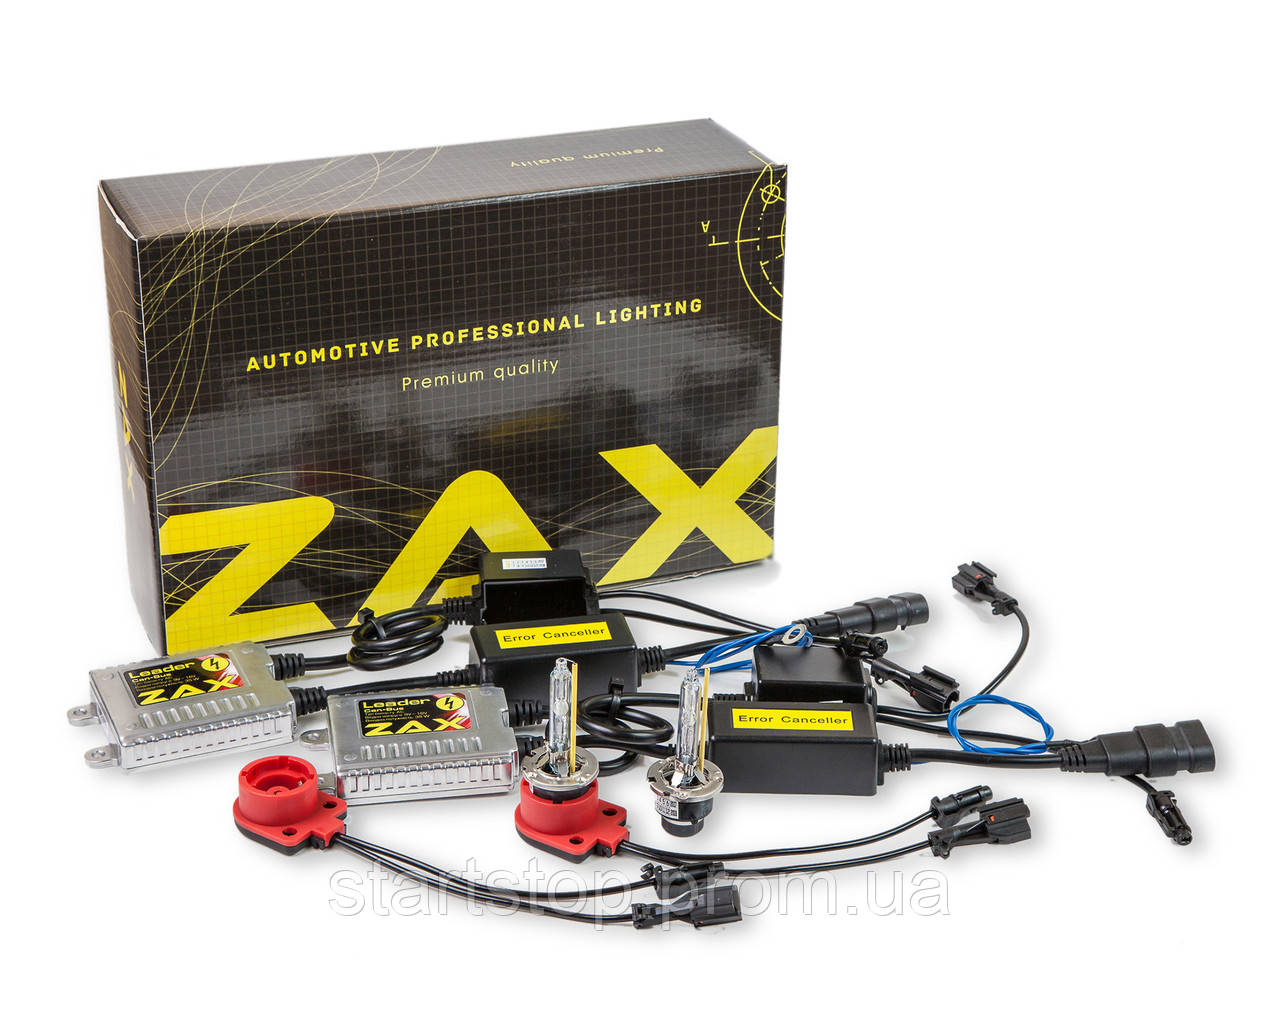 

Комплект ксенона ZAX Leader Can-Bus 35W 9-16V D2S +50% Metal 4300K (hub_RyIC22972)